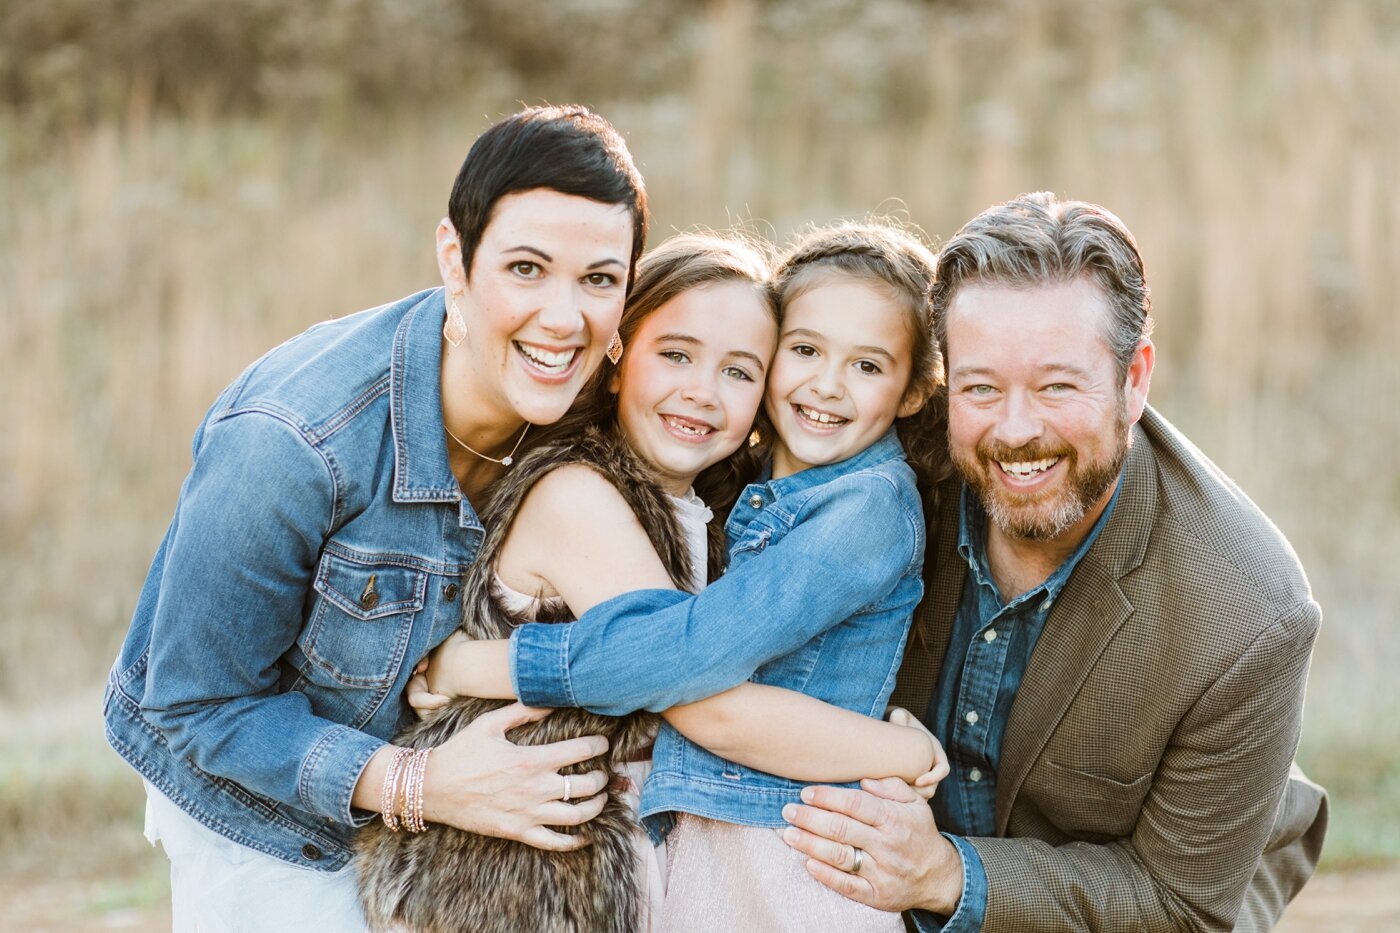 Dunn Family Photos | Nashville Family Photographer